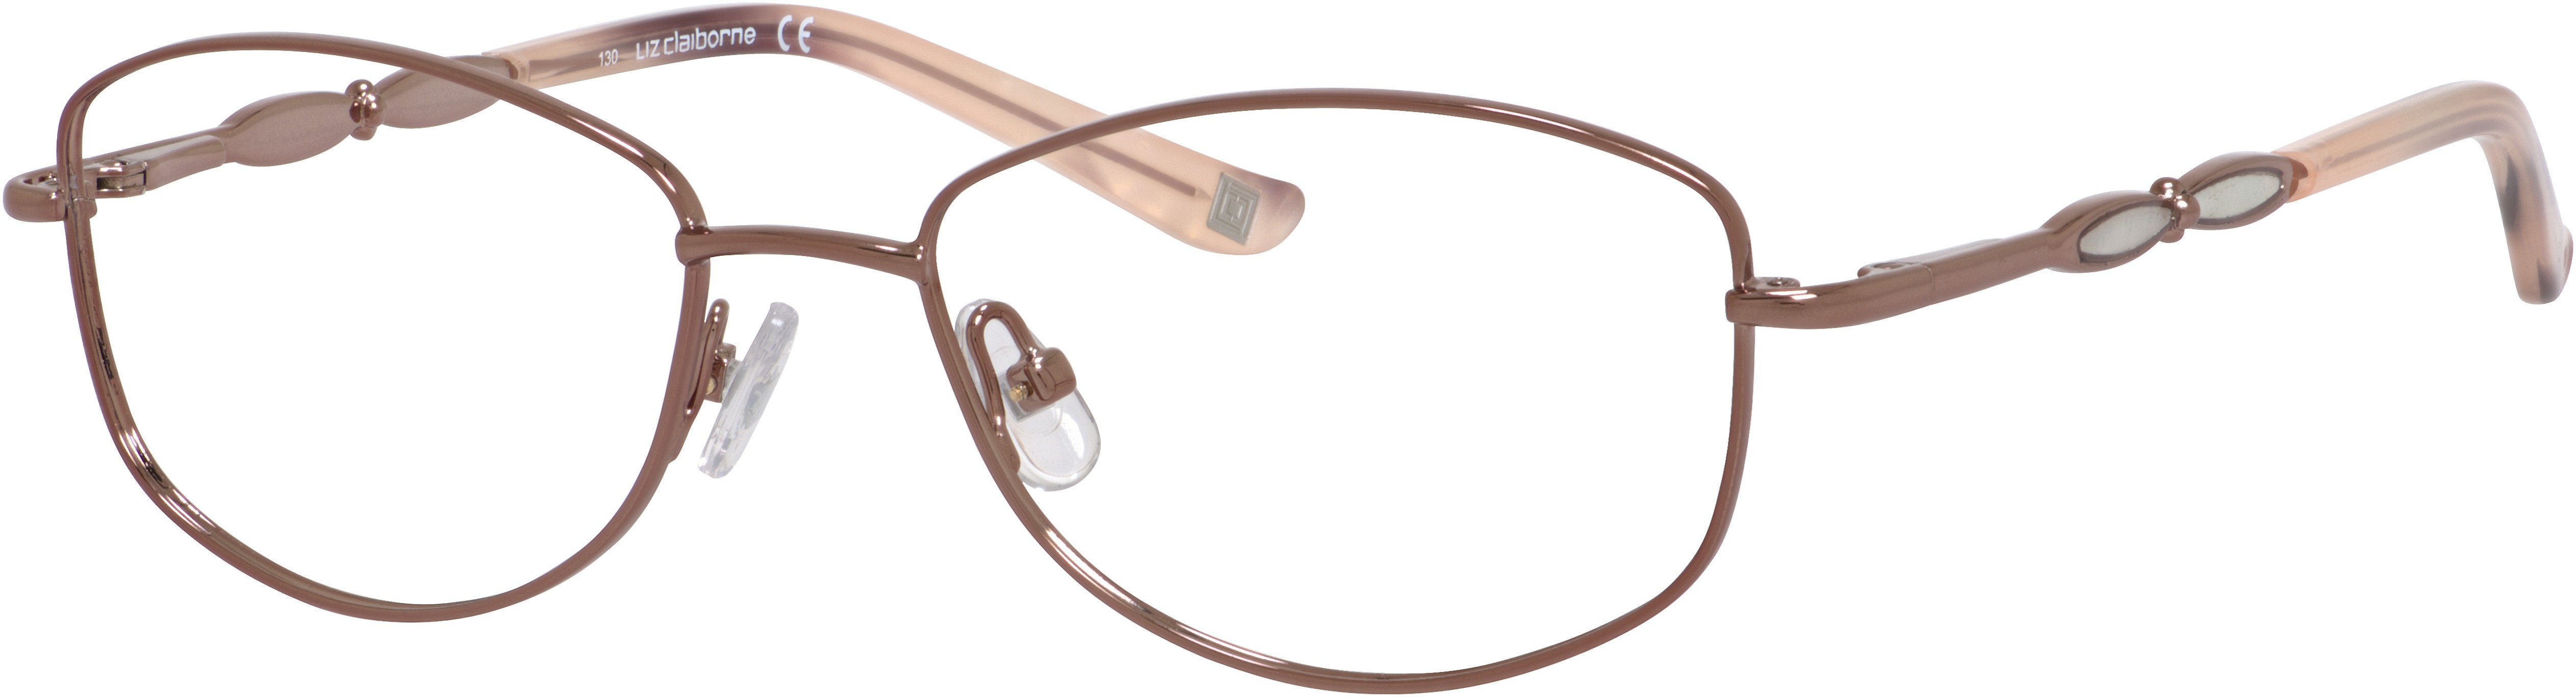  Liz Claiborne 304 Oval Modified Eyeglasses 0UU3-0UU3  Brown Rose (00 Demo Lens)